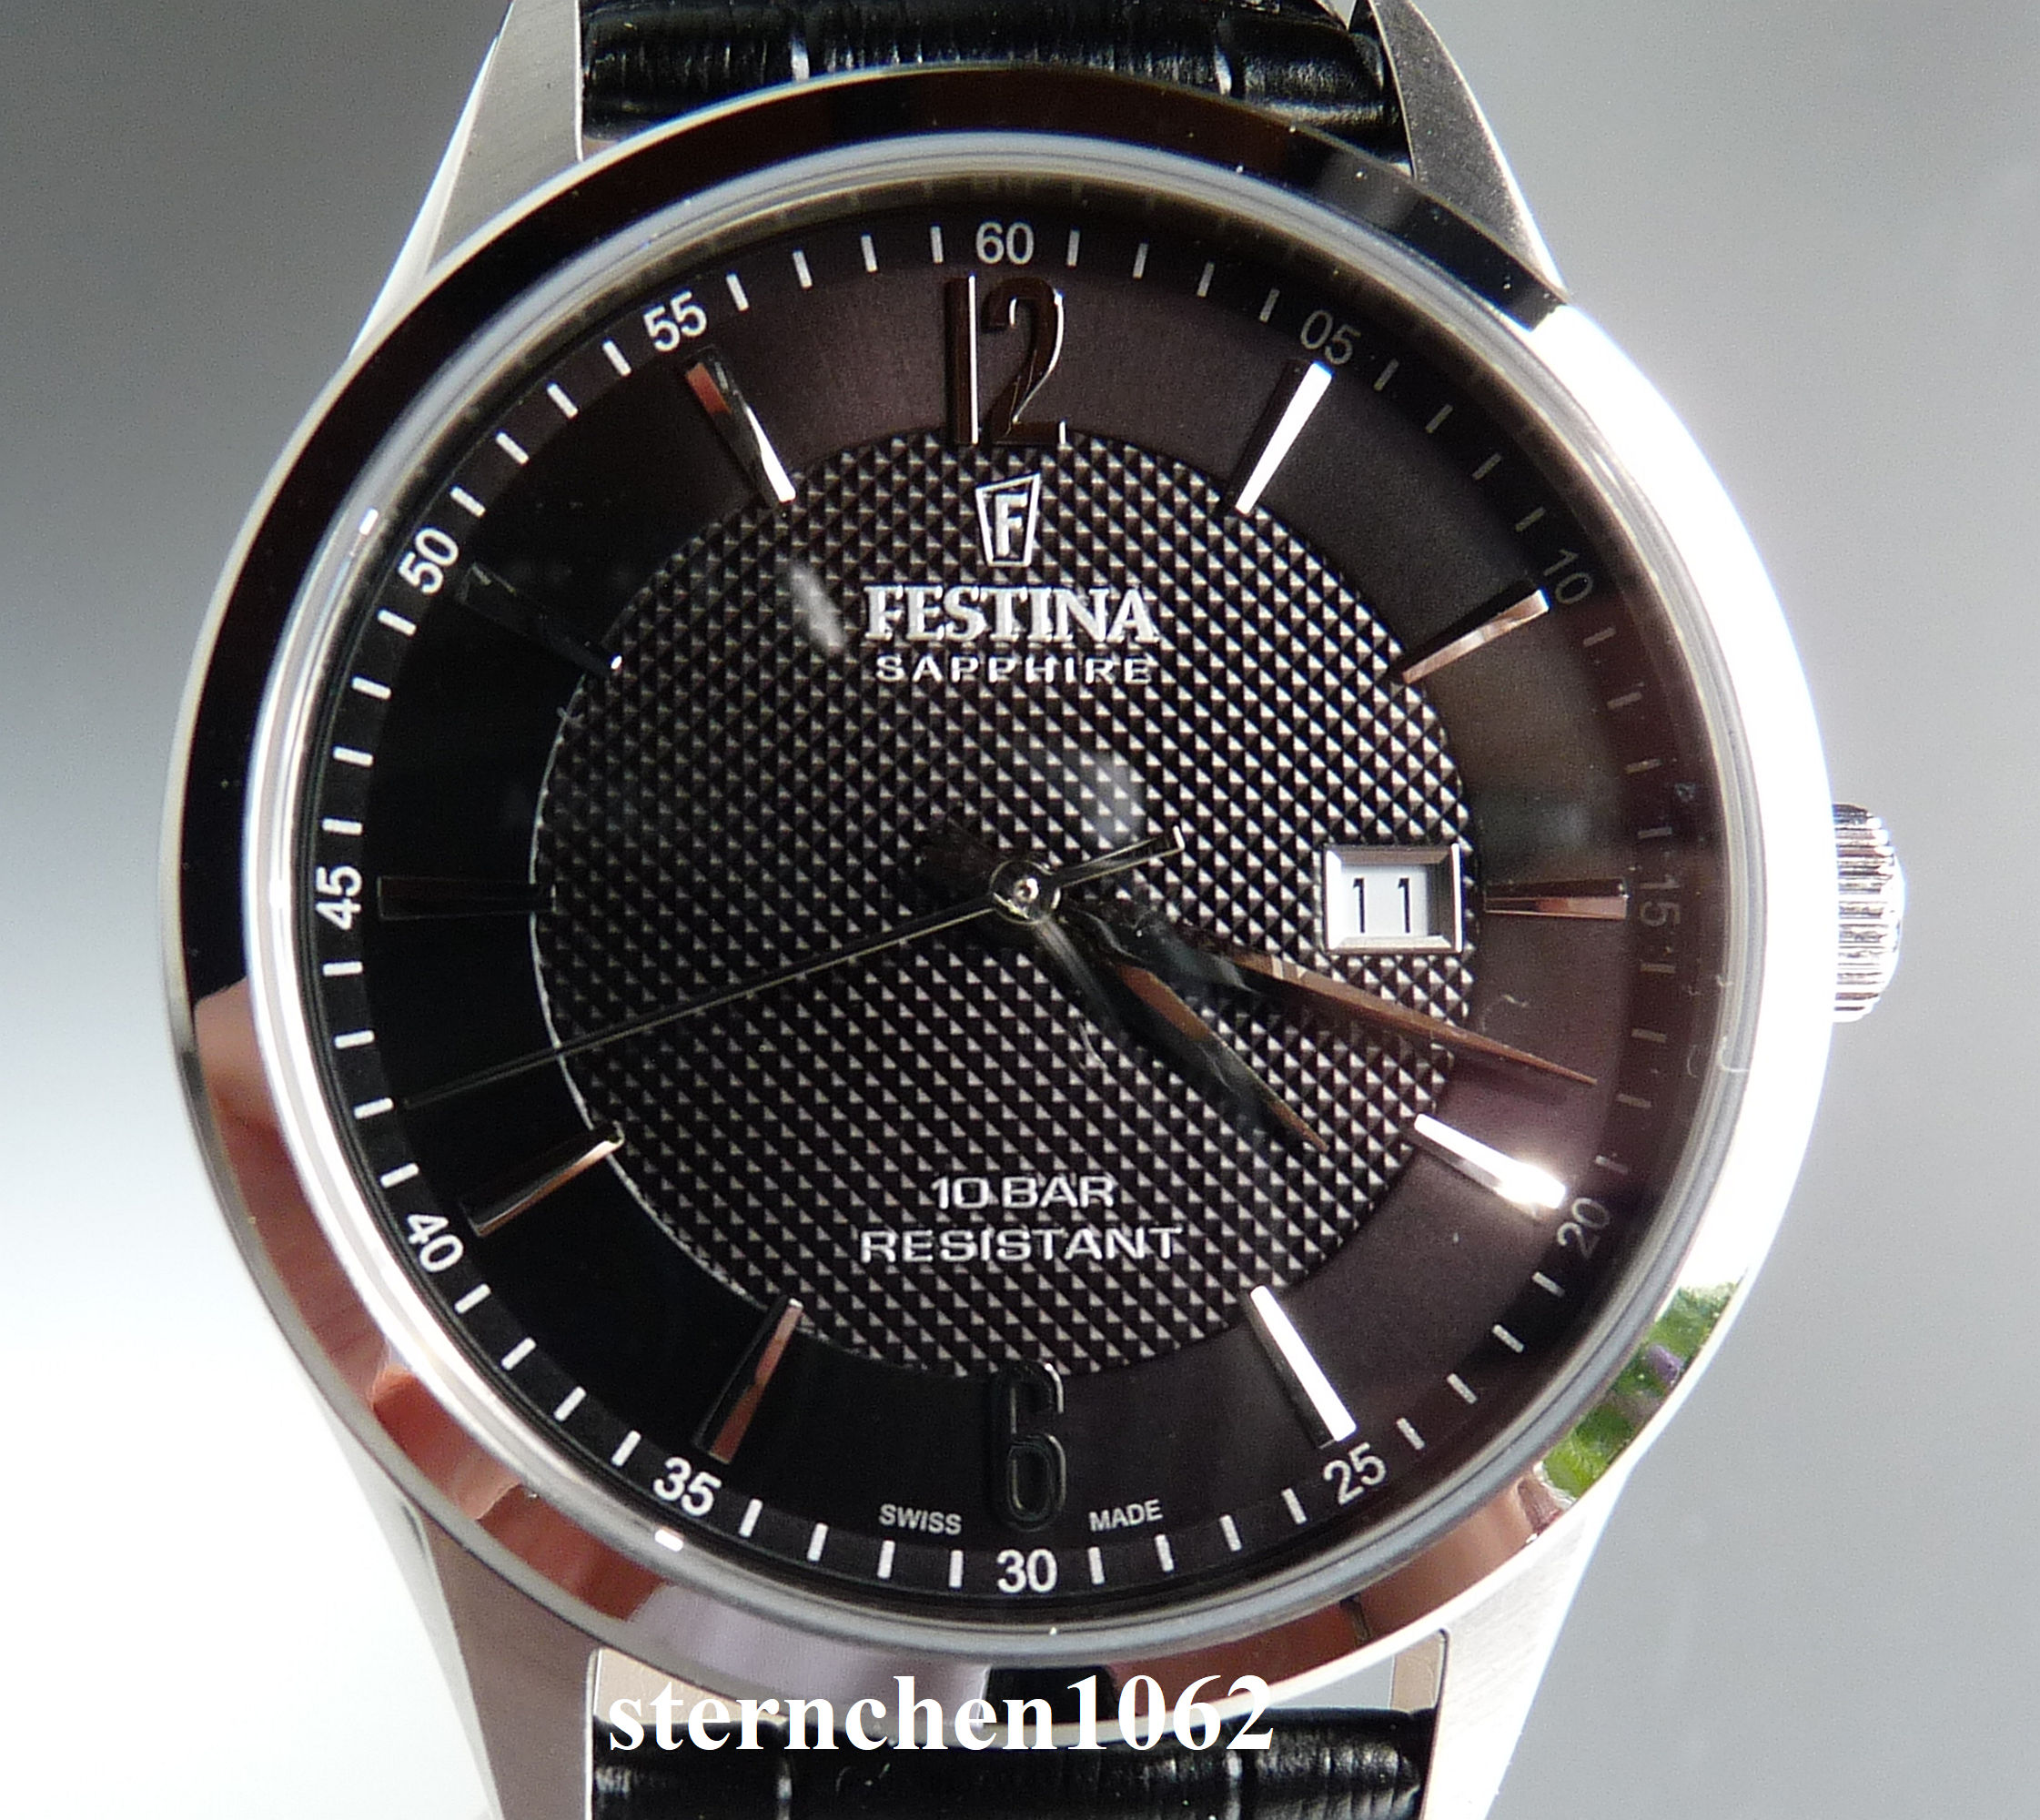 Sternchen 1062 - Festina * F20007/4 * Swiss Made *